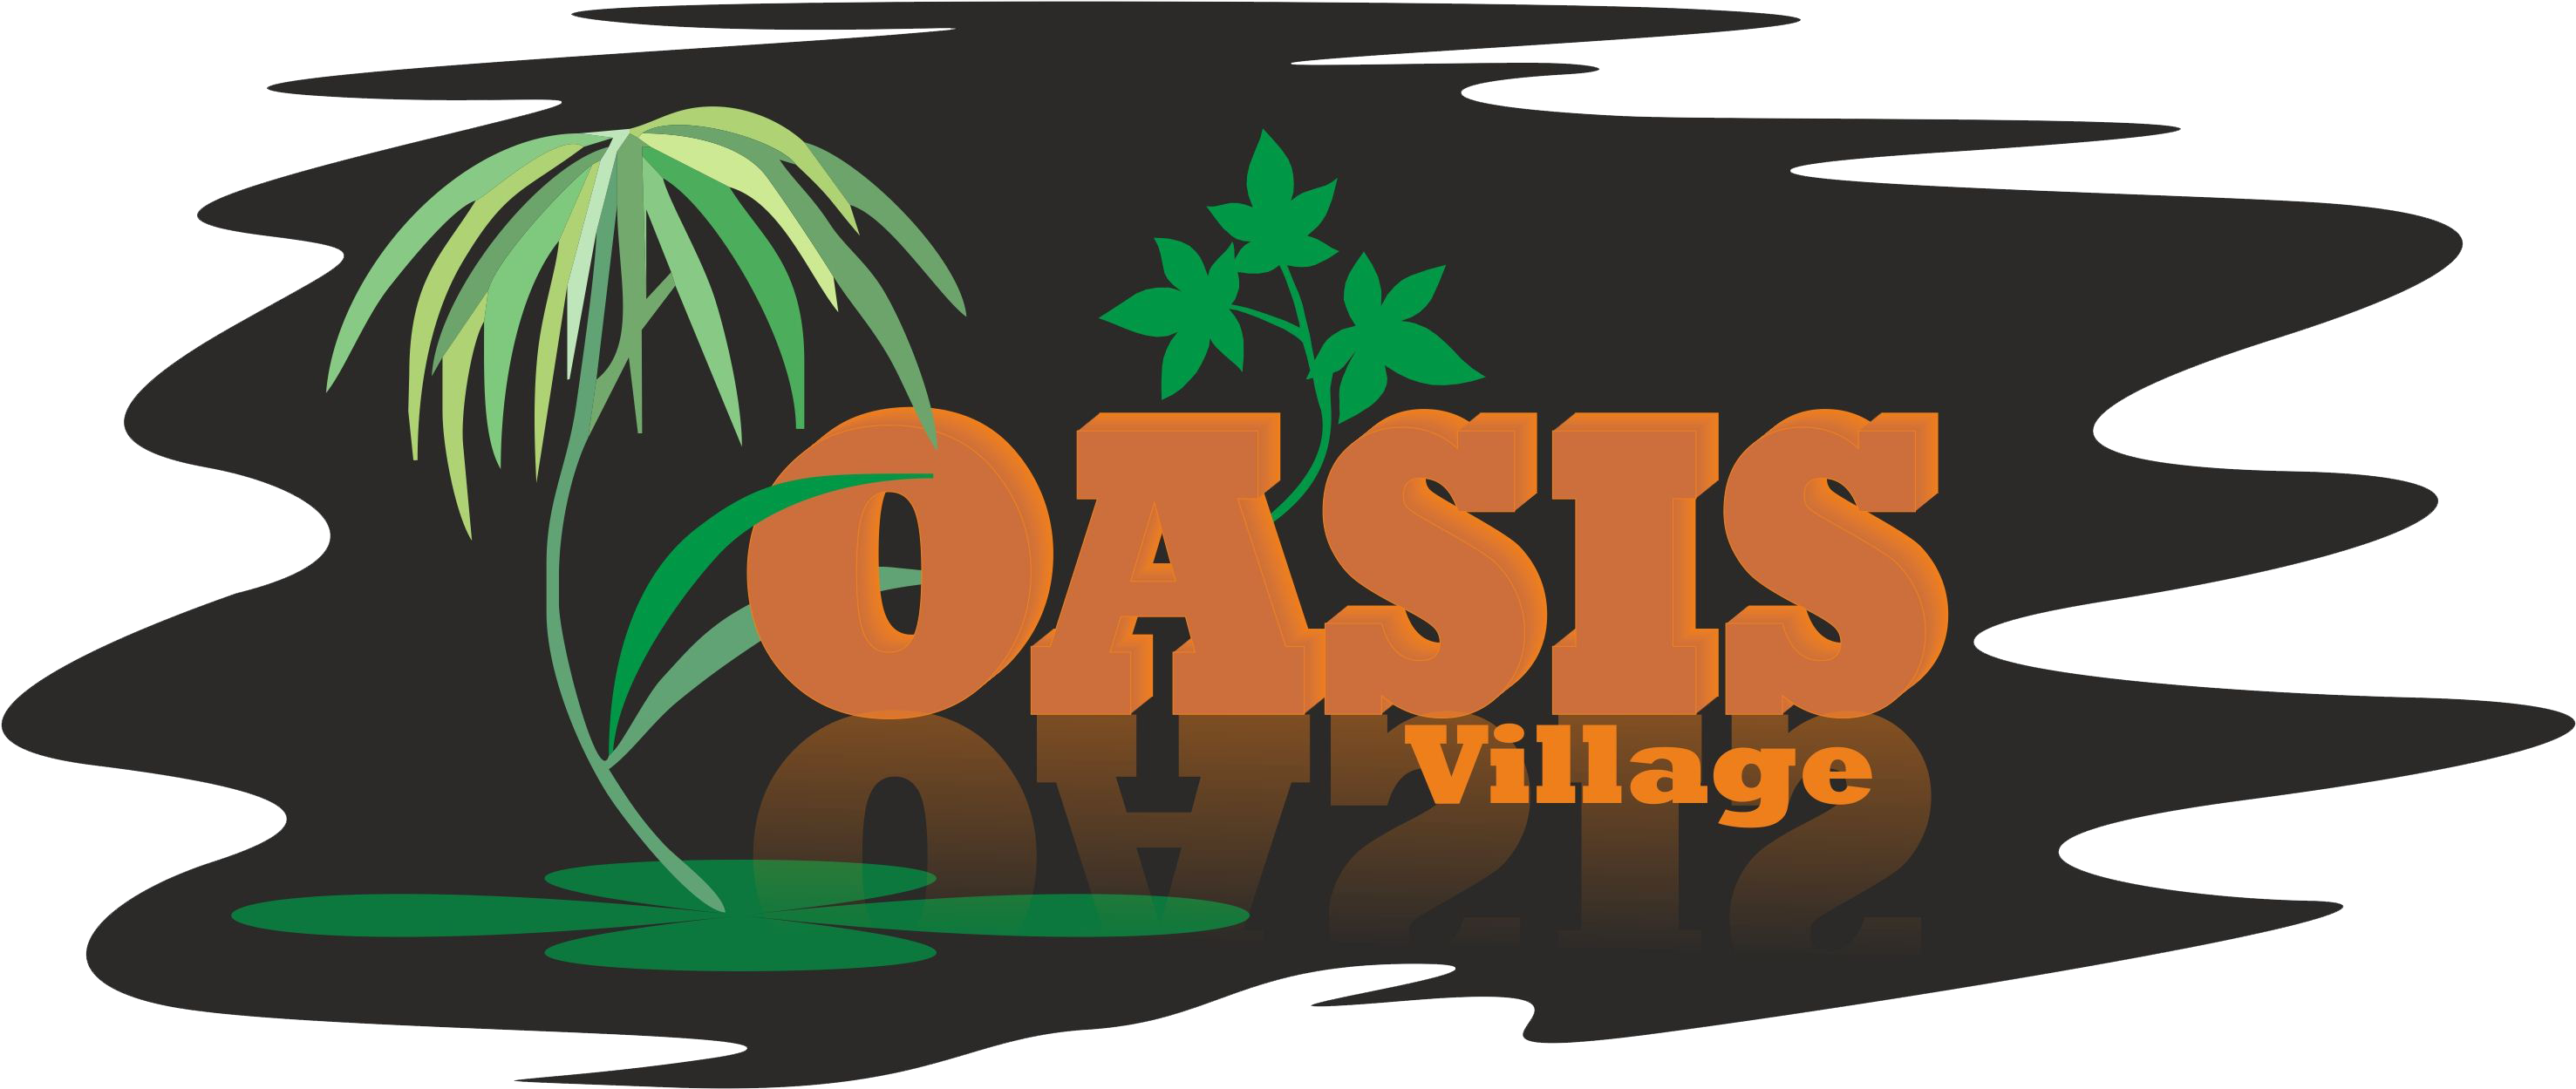 Oasis Village Graphic Logo